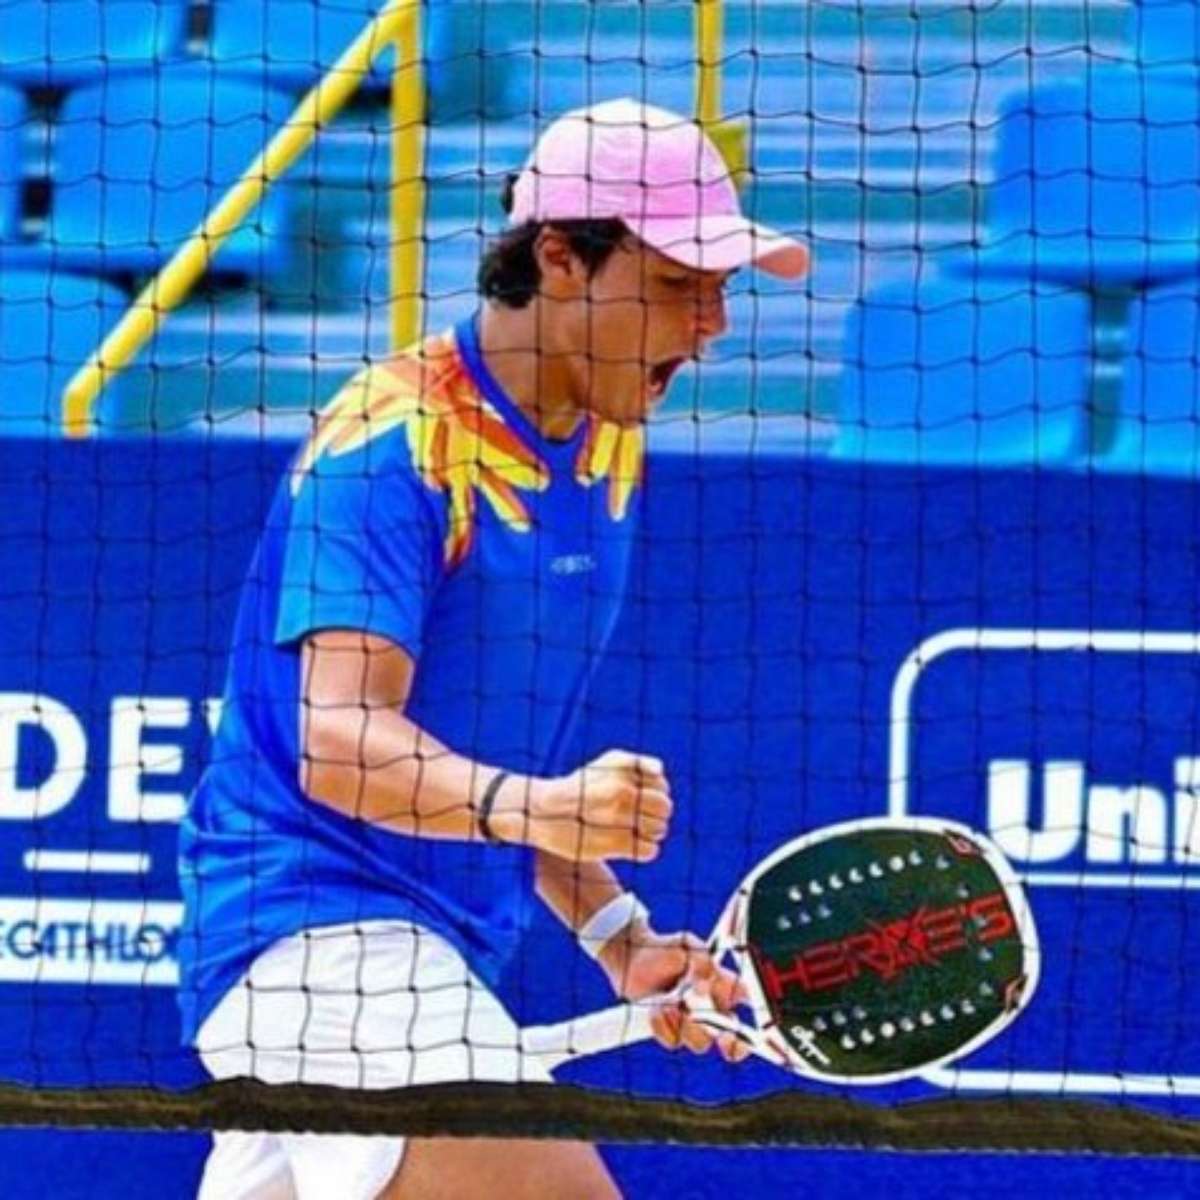 Conheça Miguel Peres, brasileiro prodígio do Beach Tennis, e